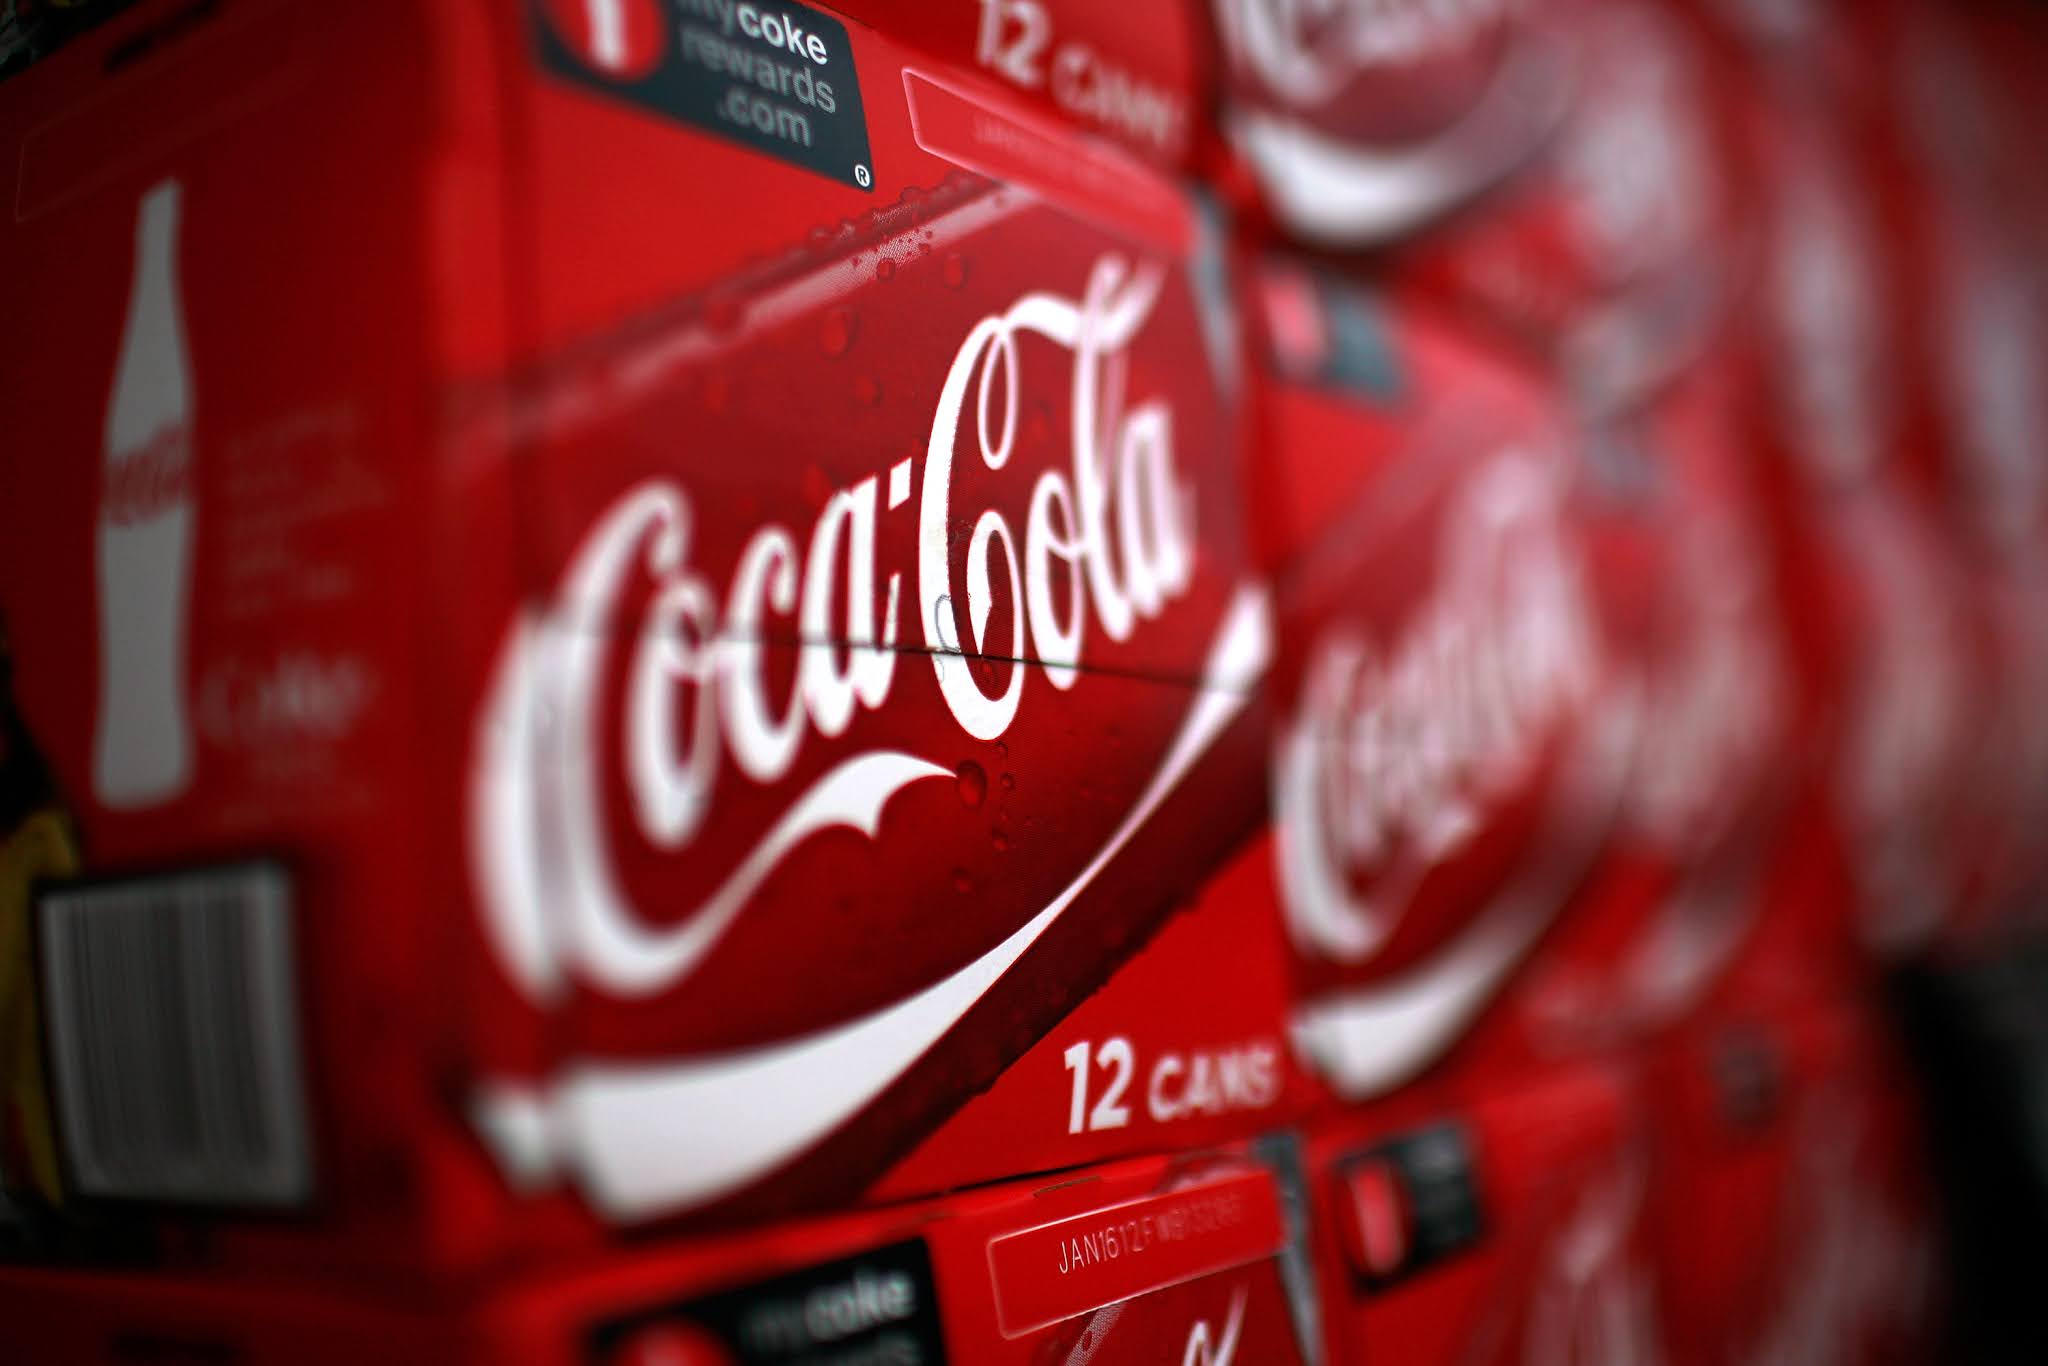 Nomes similares provocam conflito entre a Coca-Cola e a Coca-Pola